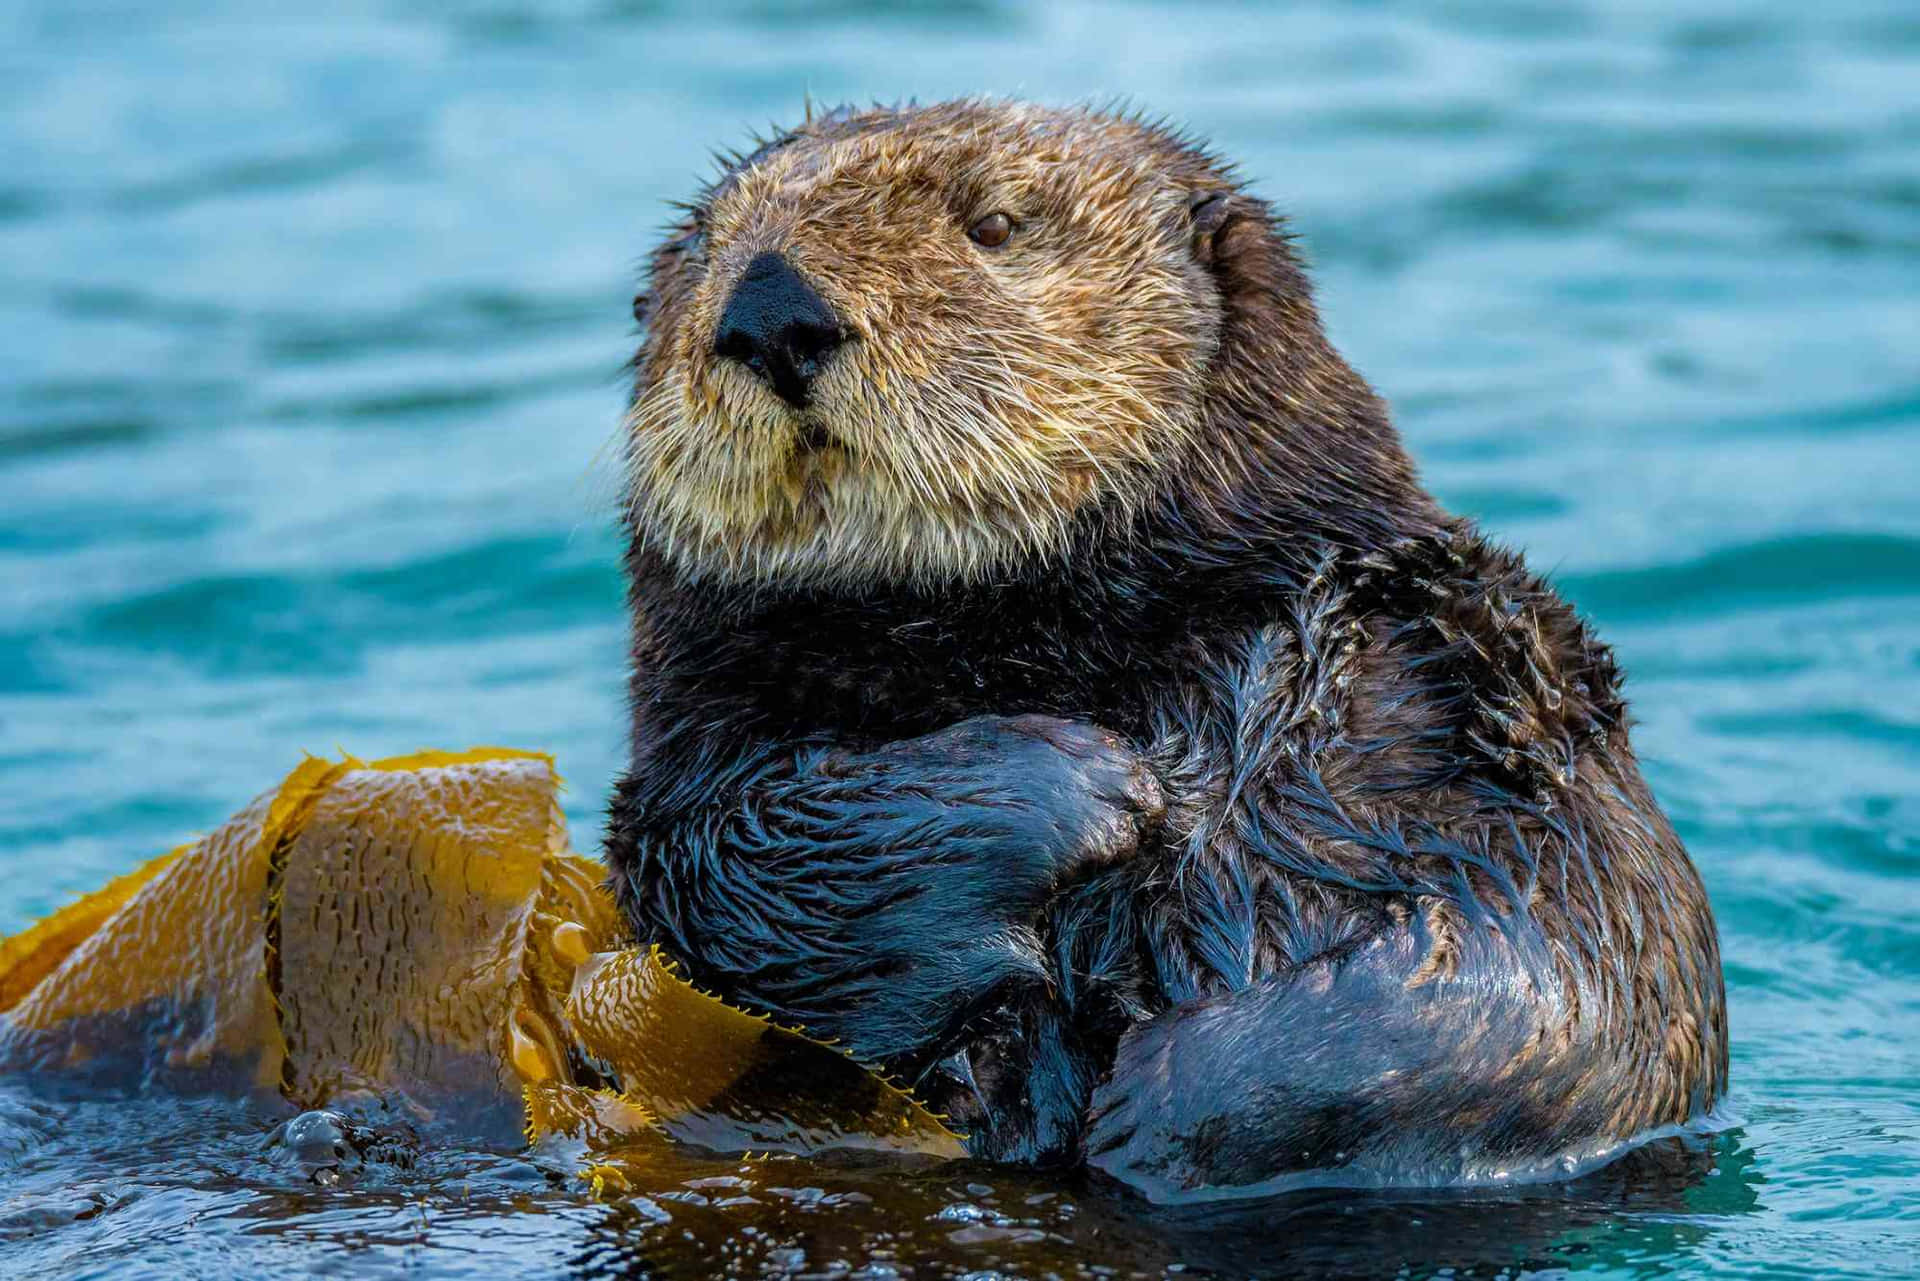 Sea Otter Relaxingwith Kelp.jpg